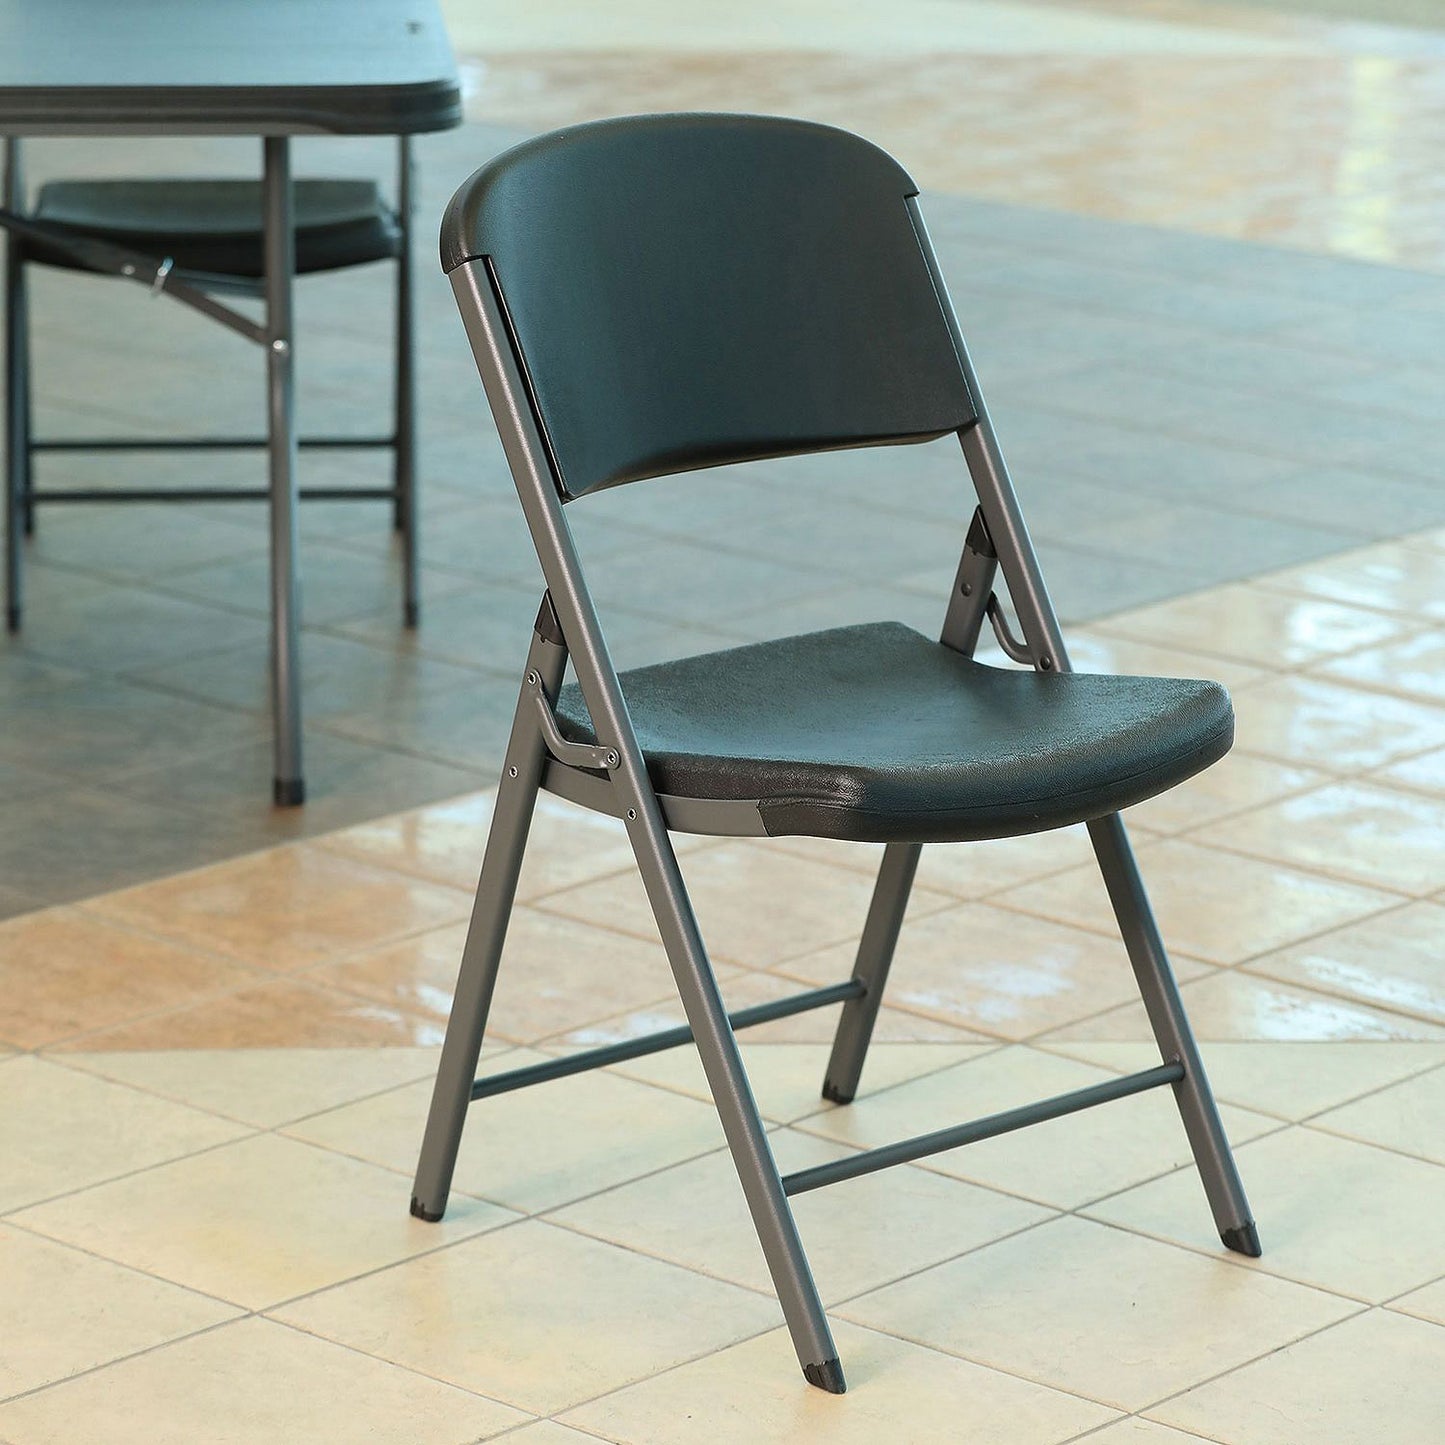 Lifetime Commercial Grade Contoured Folding Chair